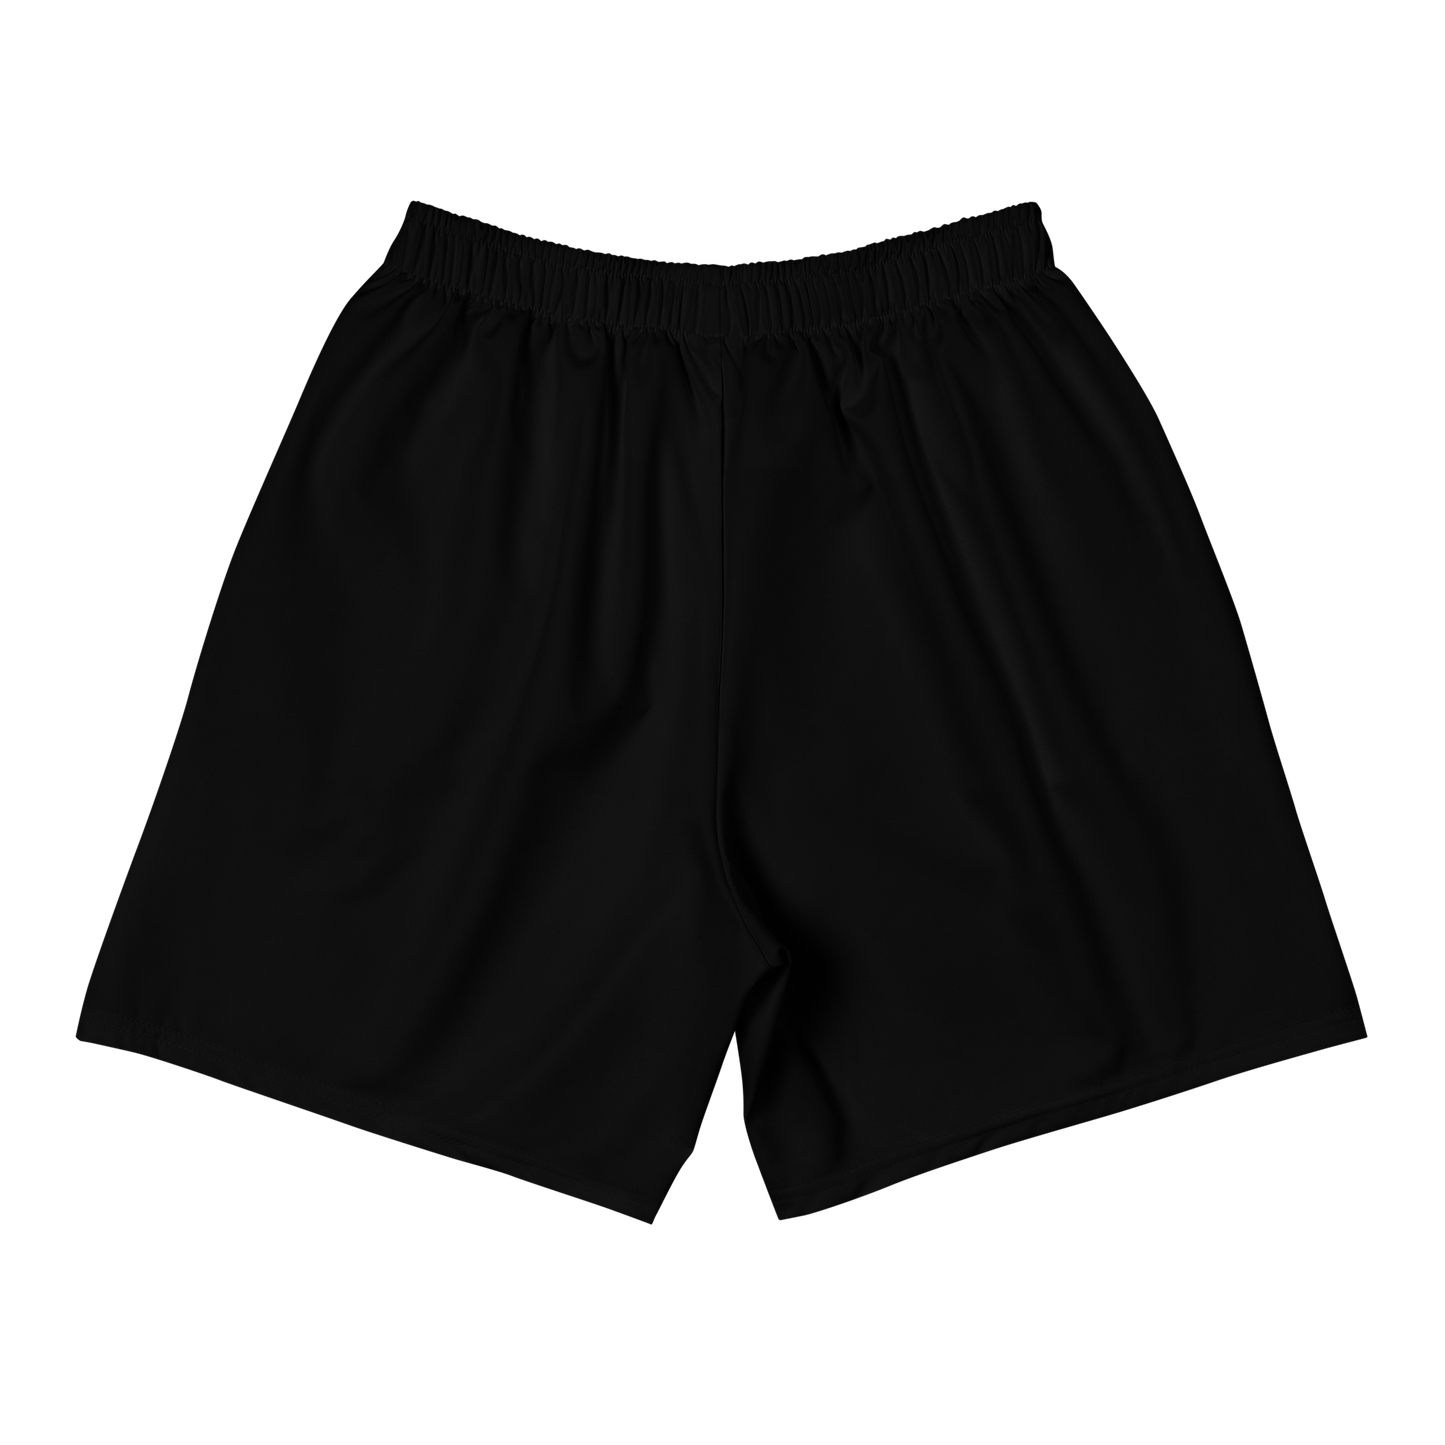 {ELEVATED MIND} Triple Black Shorts